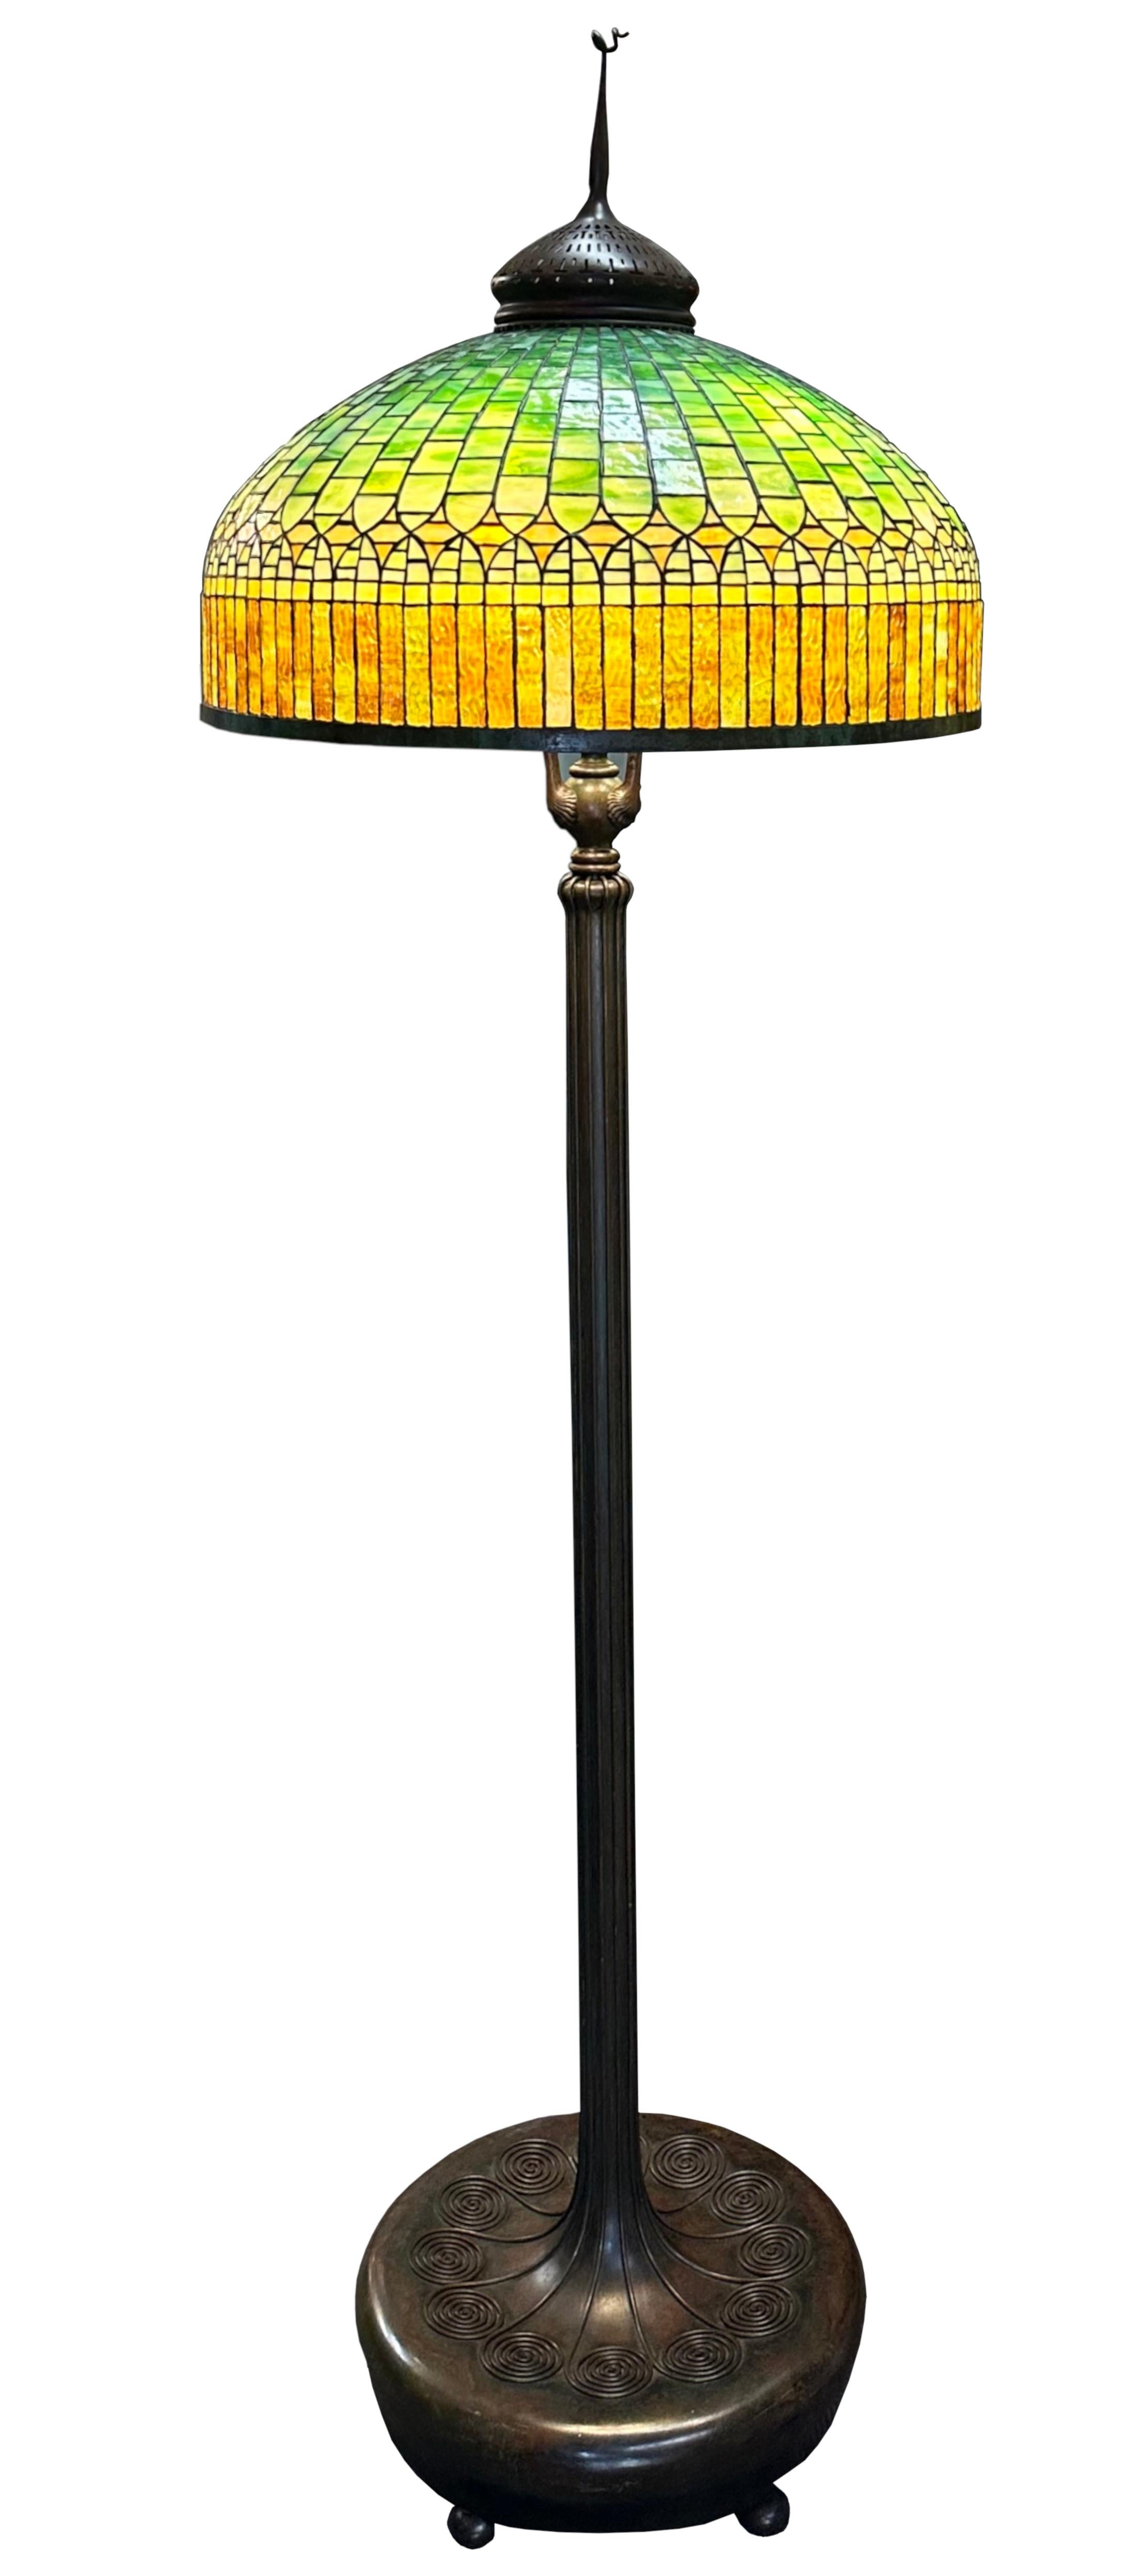 Tiffany Studios “Curtain Border” Floor Lamp 1899-1920 For Sale 6